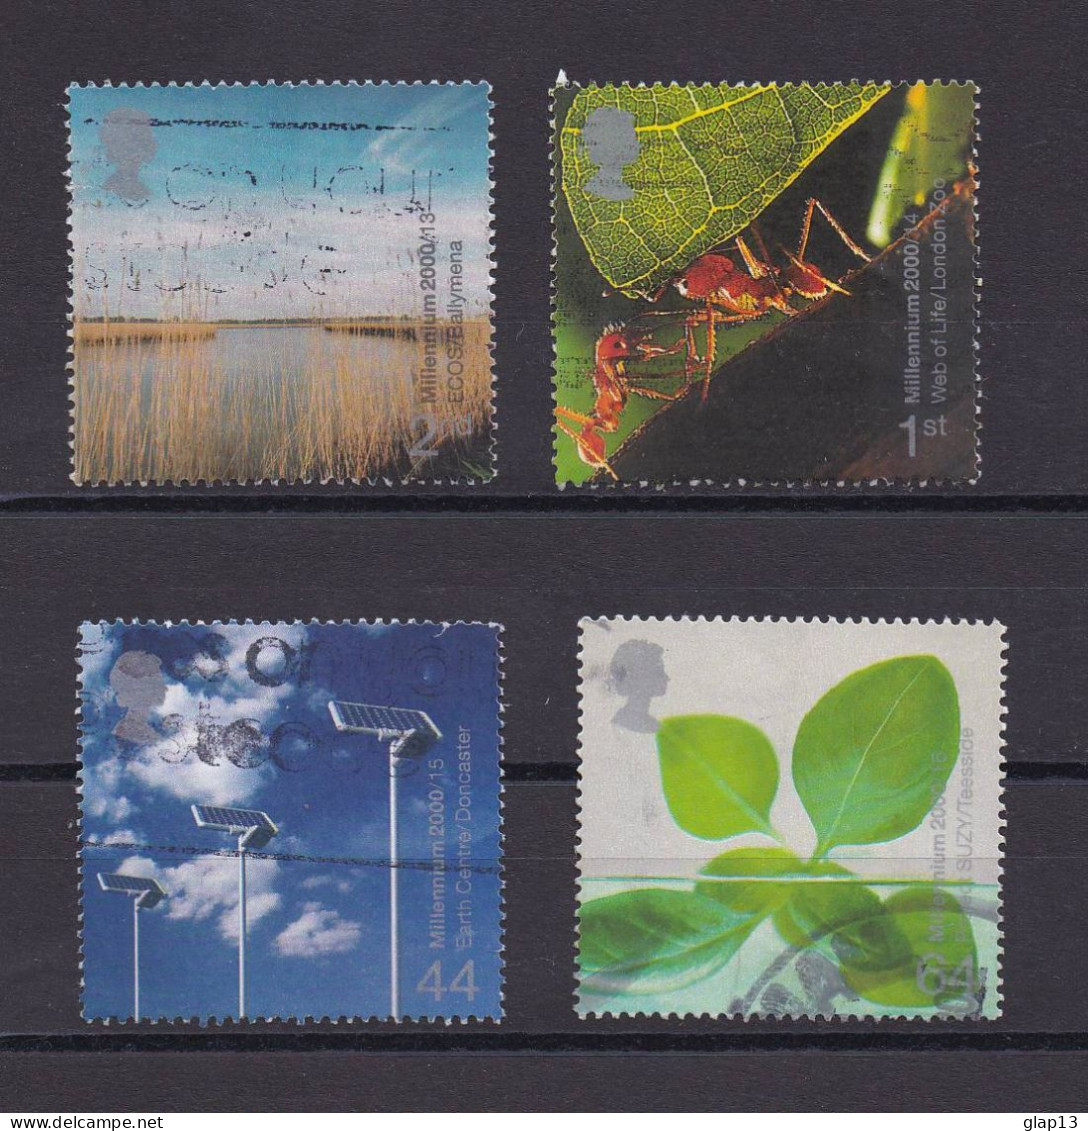 GRANDE-BRETAGNE 2000 TIMBRE N°2162/65 OBLITERE NOUVEAU MILLENAIRE - Used Stamps